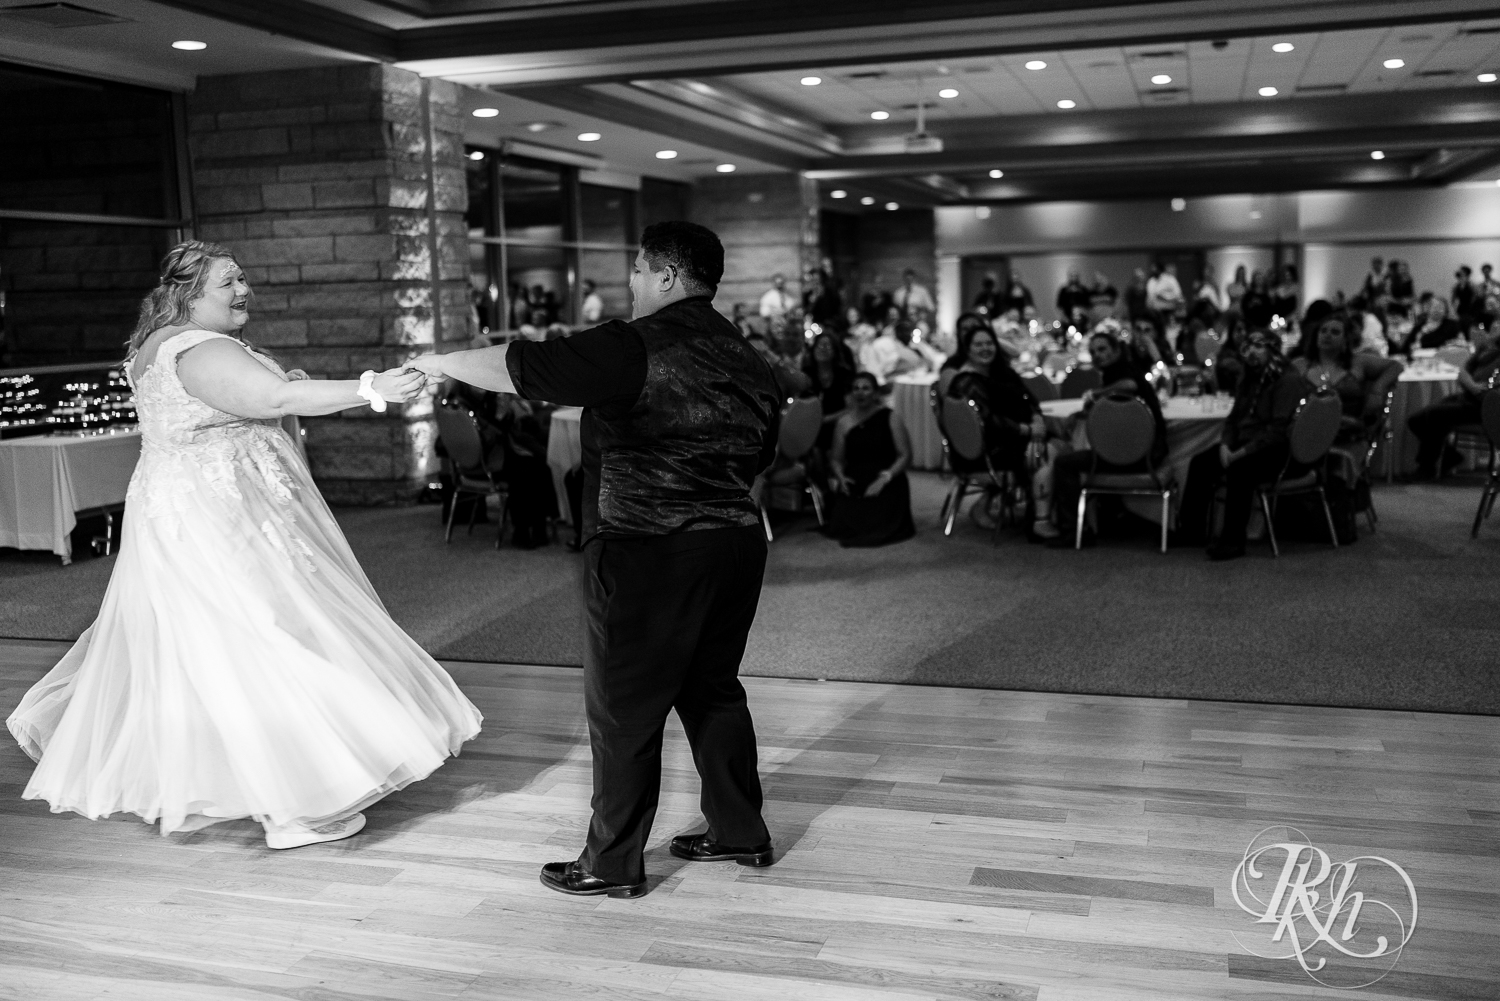 Lesbian brides share first dance at wedding at Eagan Community Center in Eagan, Minnesota.